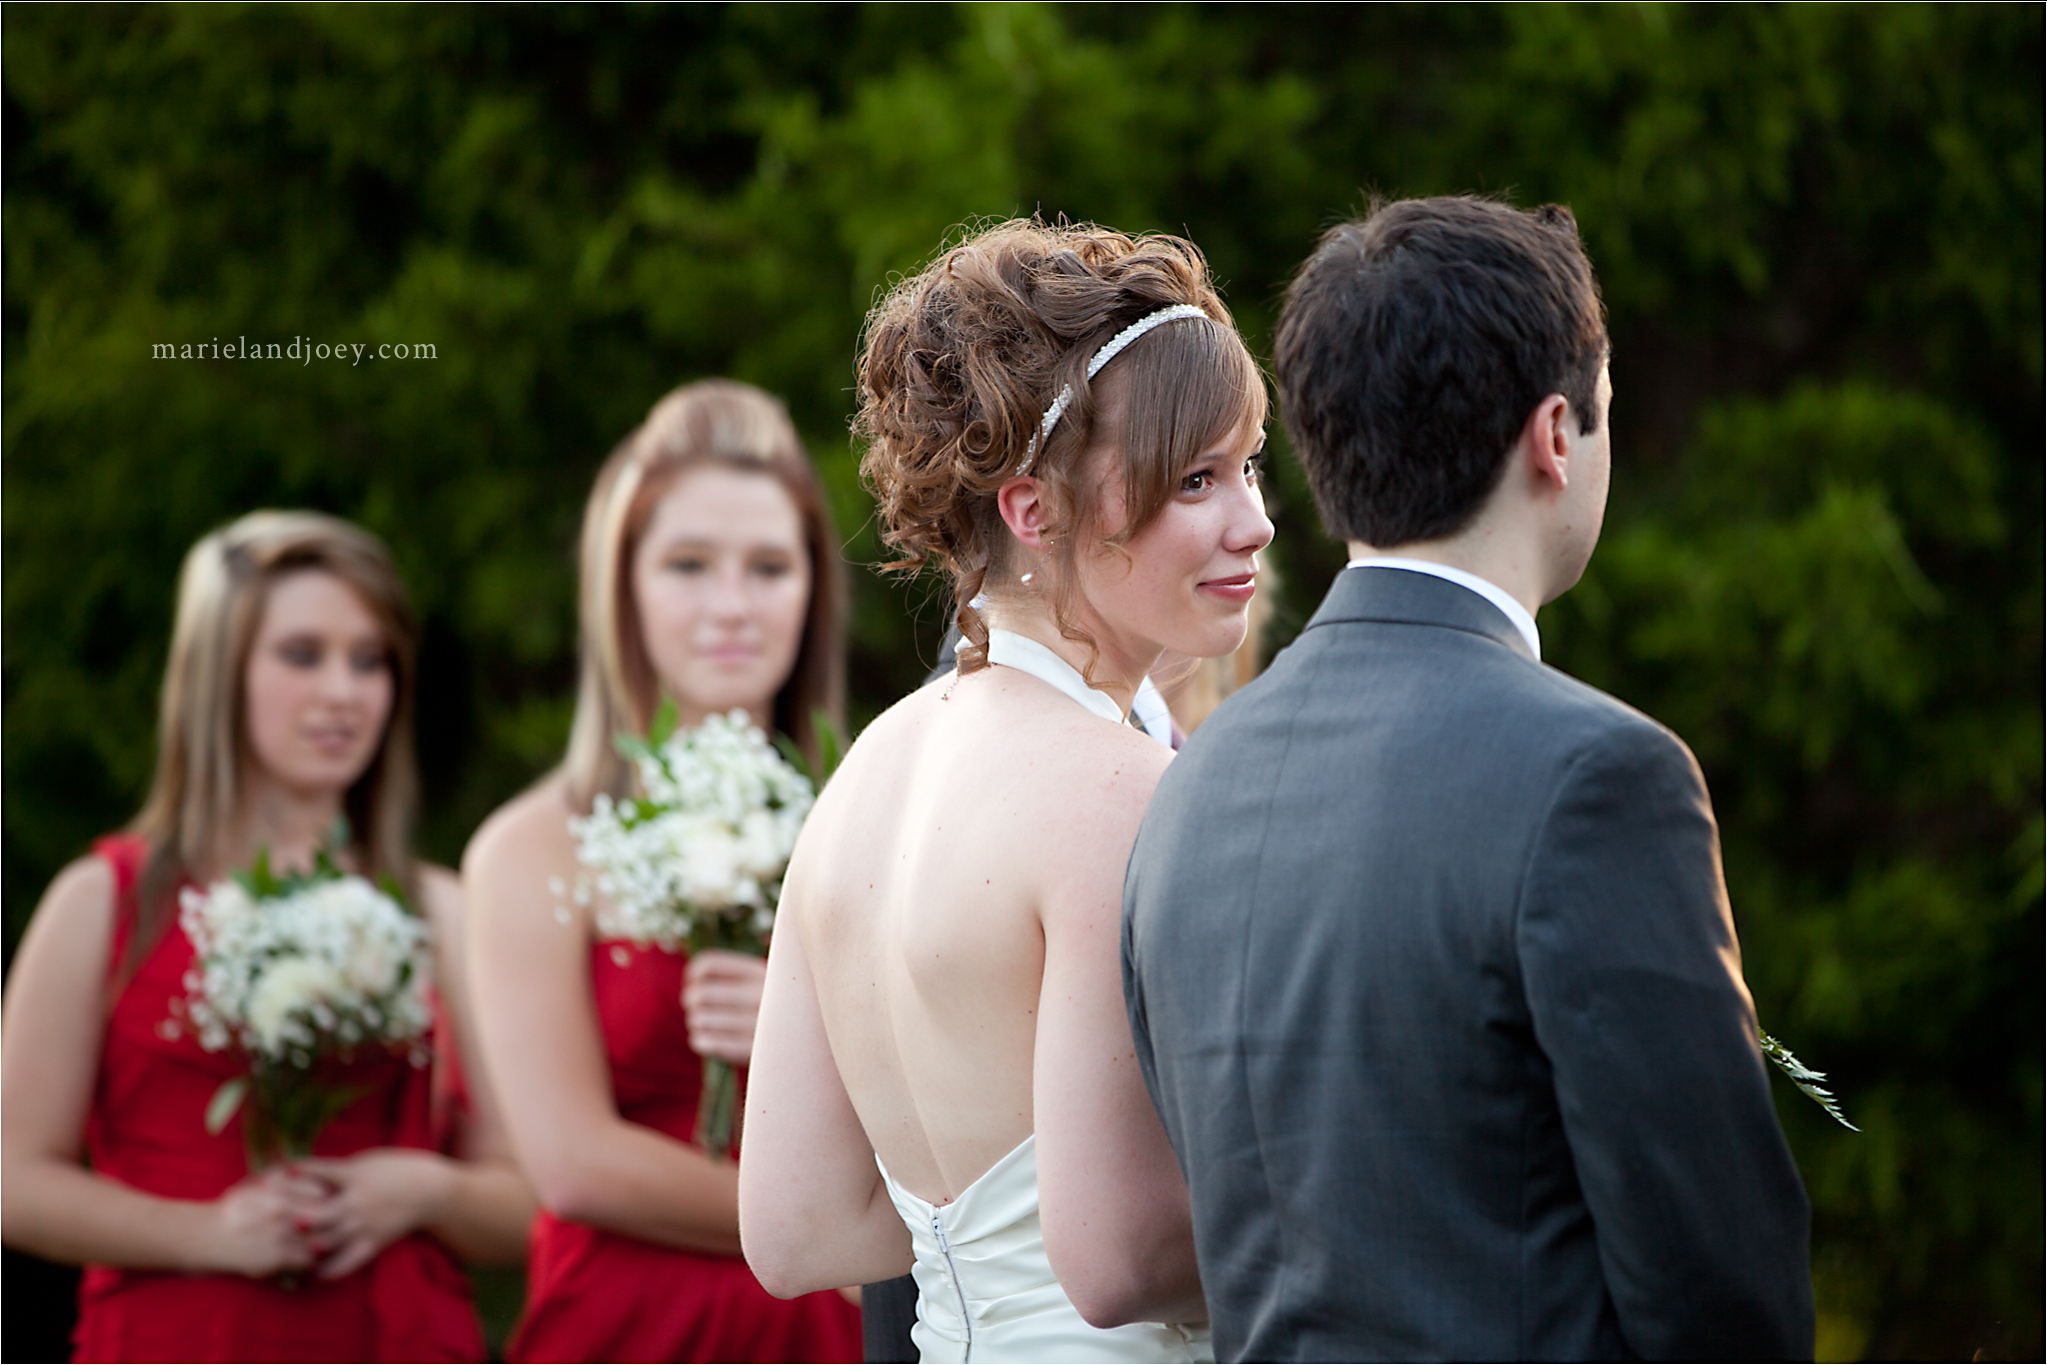 Outdoor Backyard wedding in Wylie bride looking at groom during ceremony